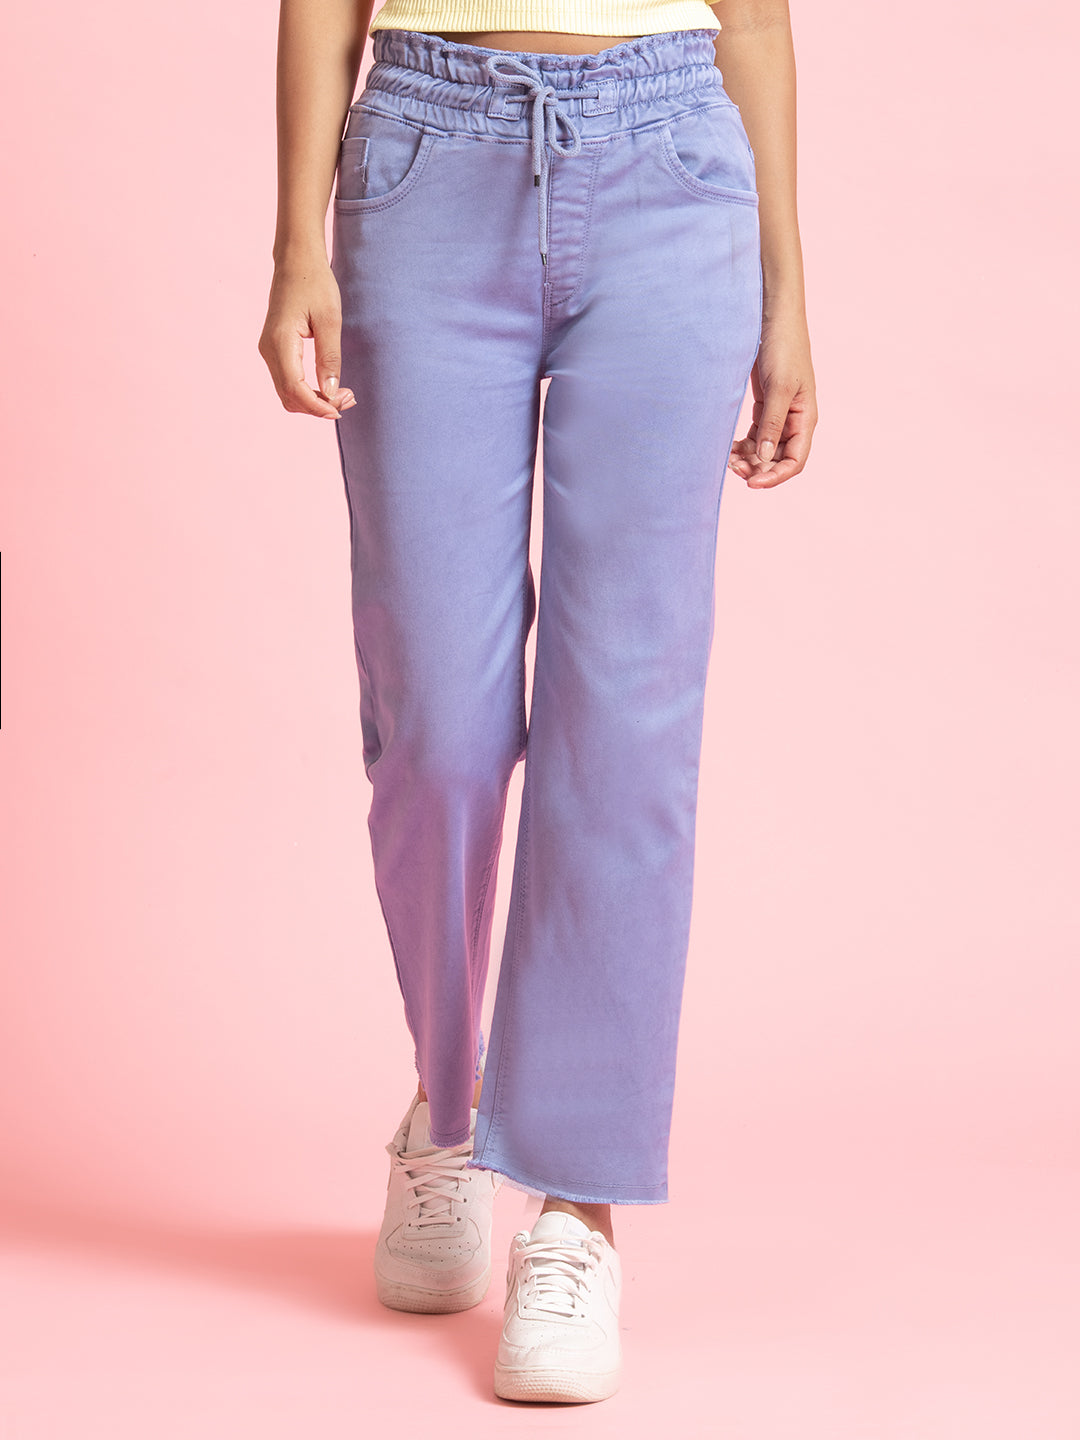 Blue Denim Full-Length Elastic Closure Jeans